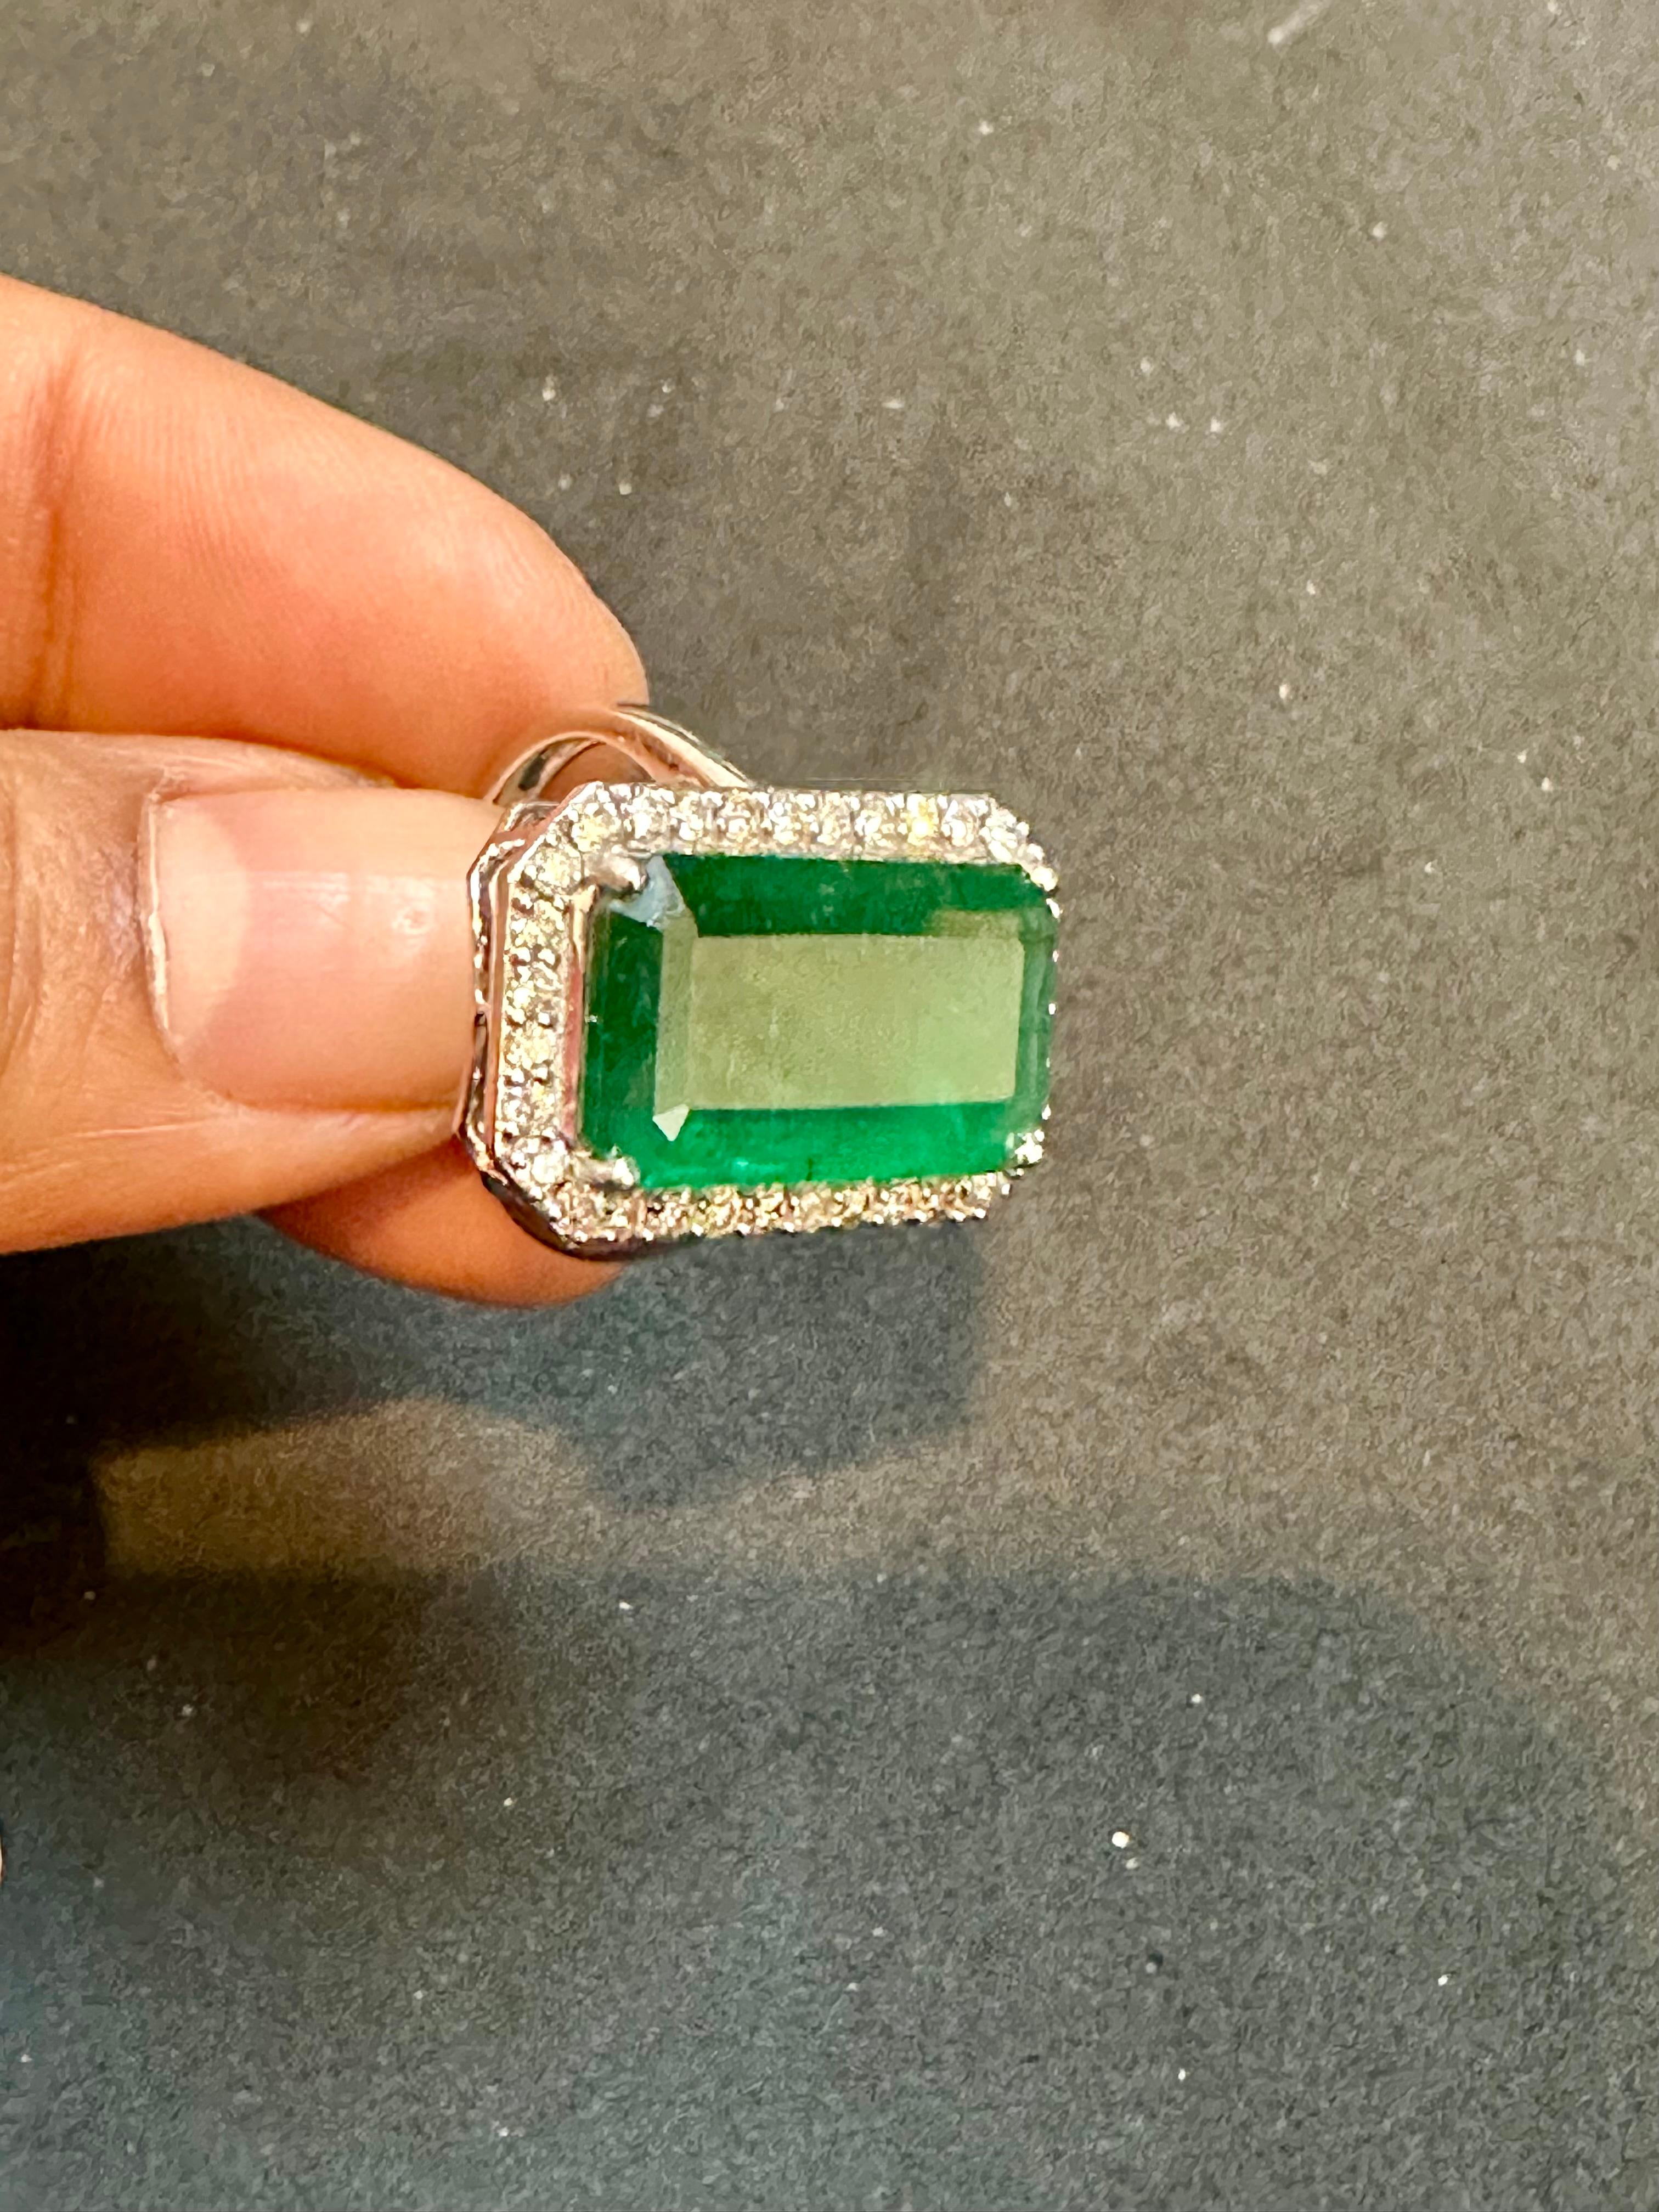 Women's Natural 9 Carat Emerald Cut Zambian Emerald & Diamond Ring in 14 Kt White Gold